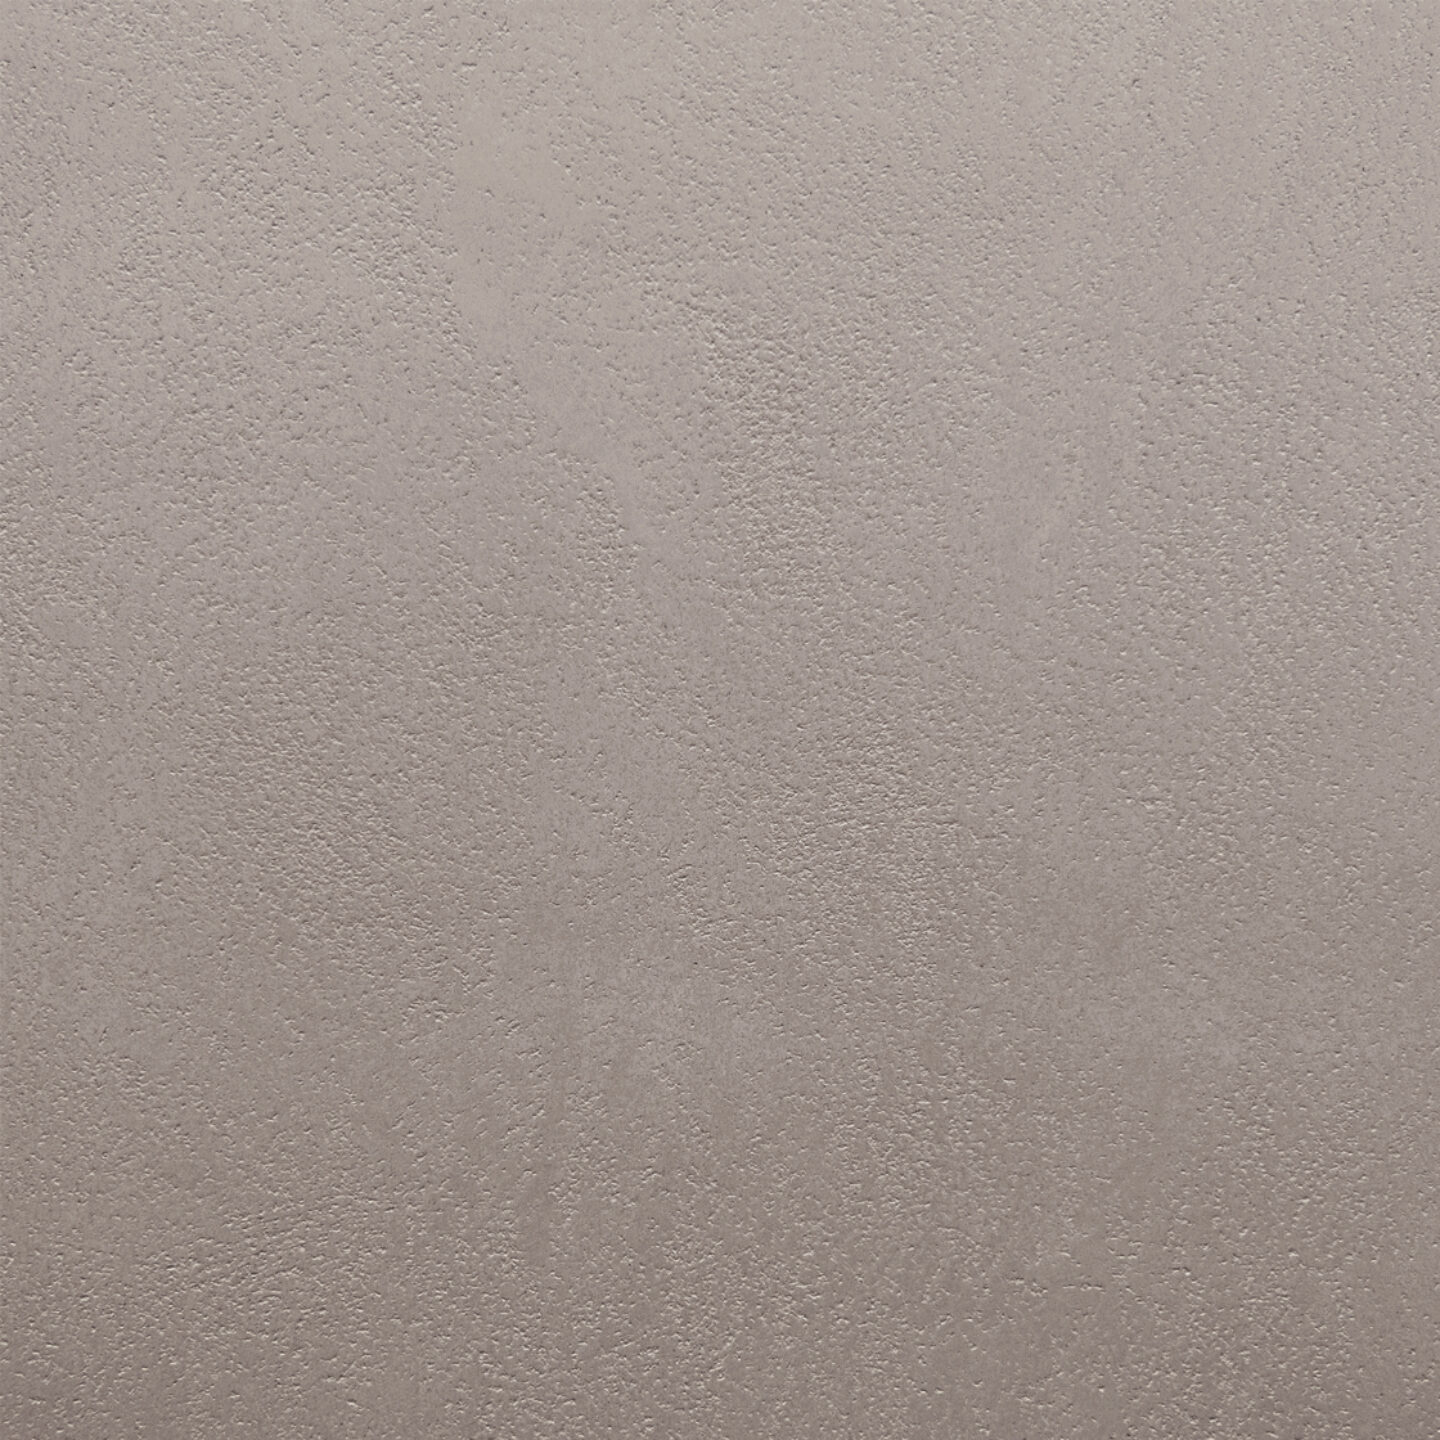 Close up of Armourcoat leatherstone exterior polished plaster finish - 34